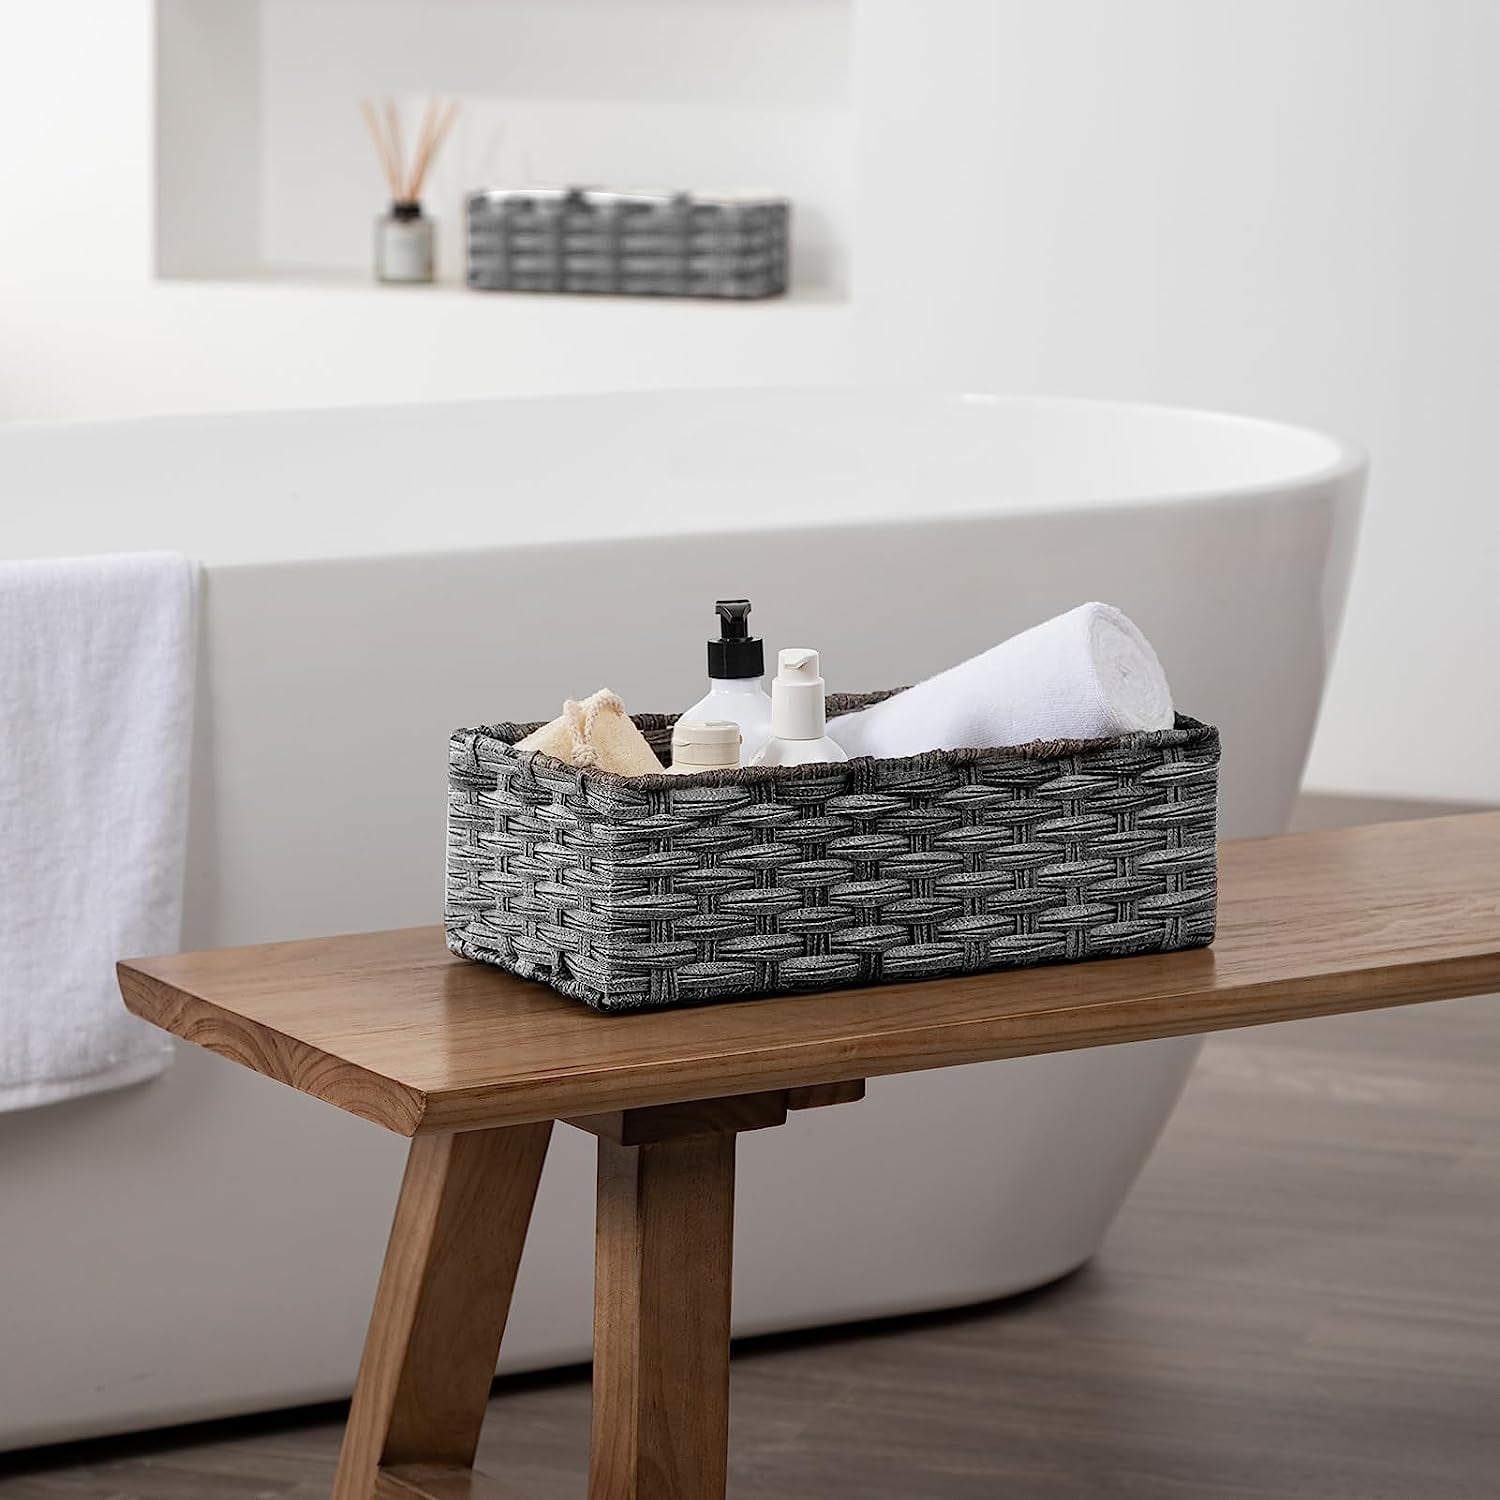 2 Pack Gray Bathroom Decor Box Toilet Tank Basket Topper - Wood